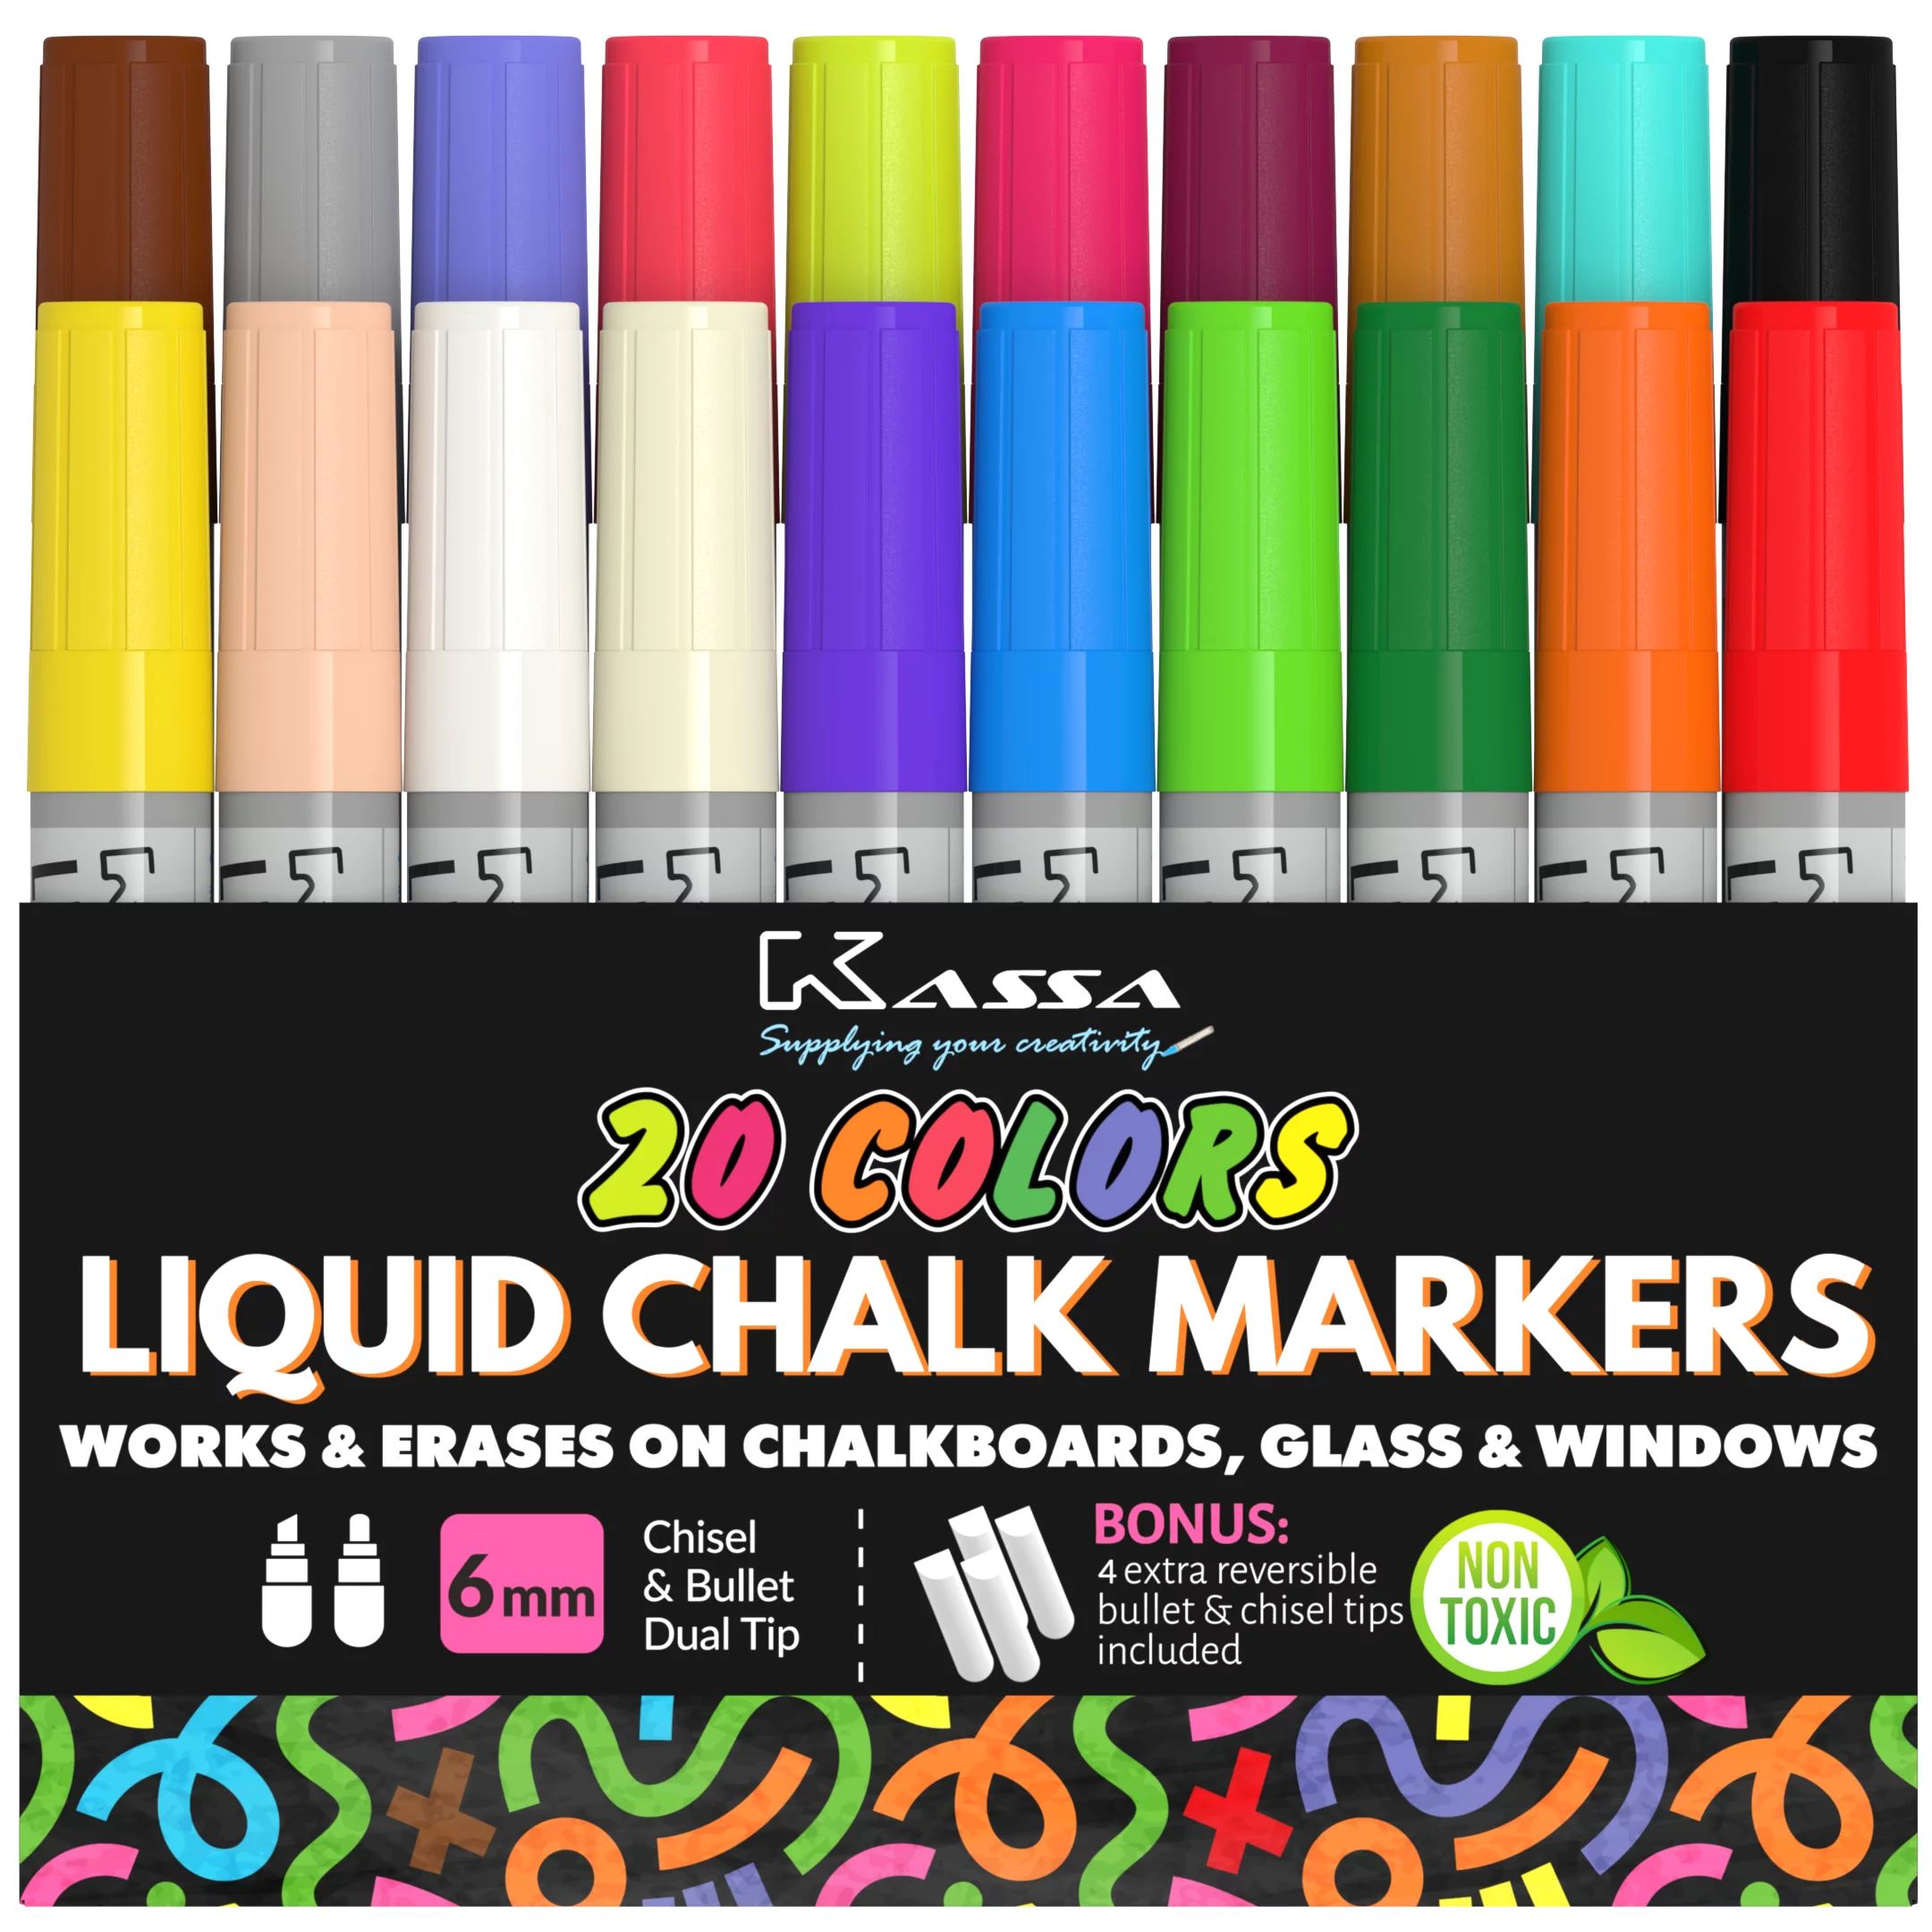 Kassa Liquid Chalk Markers for Blackboards (20 Colors) - Chalkboard Marker Erases on Glass, Windo... | Walmart (US)